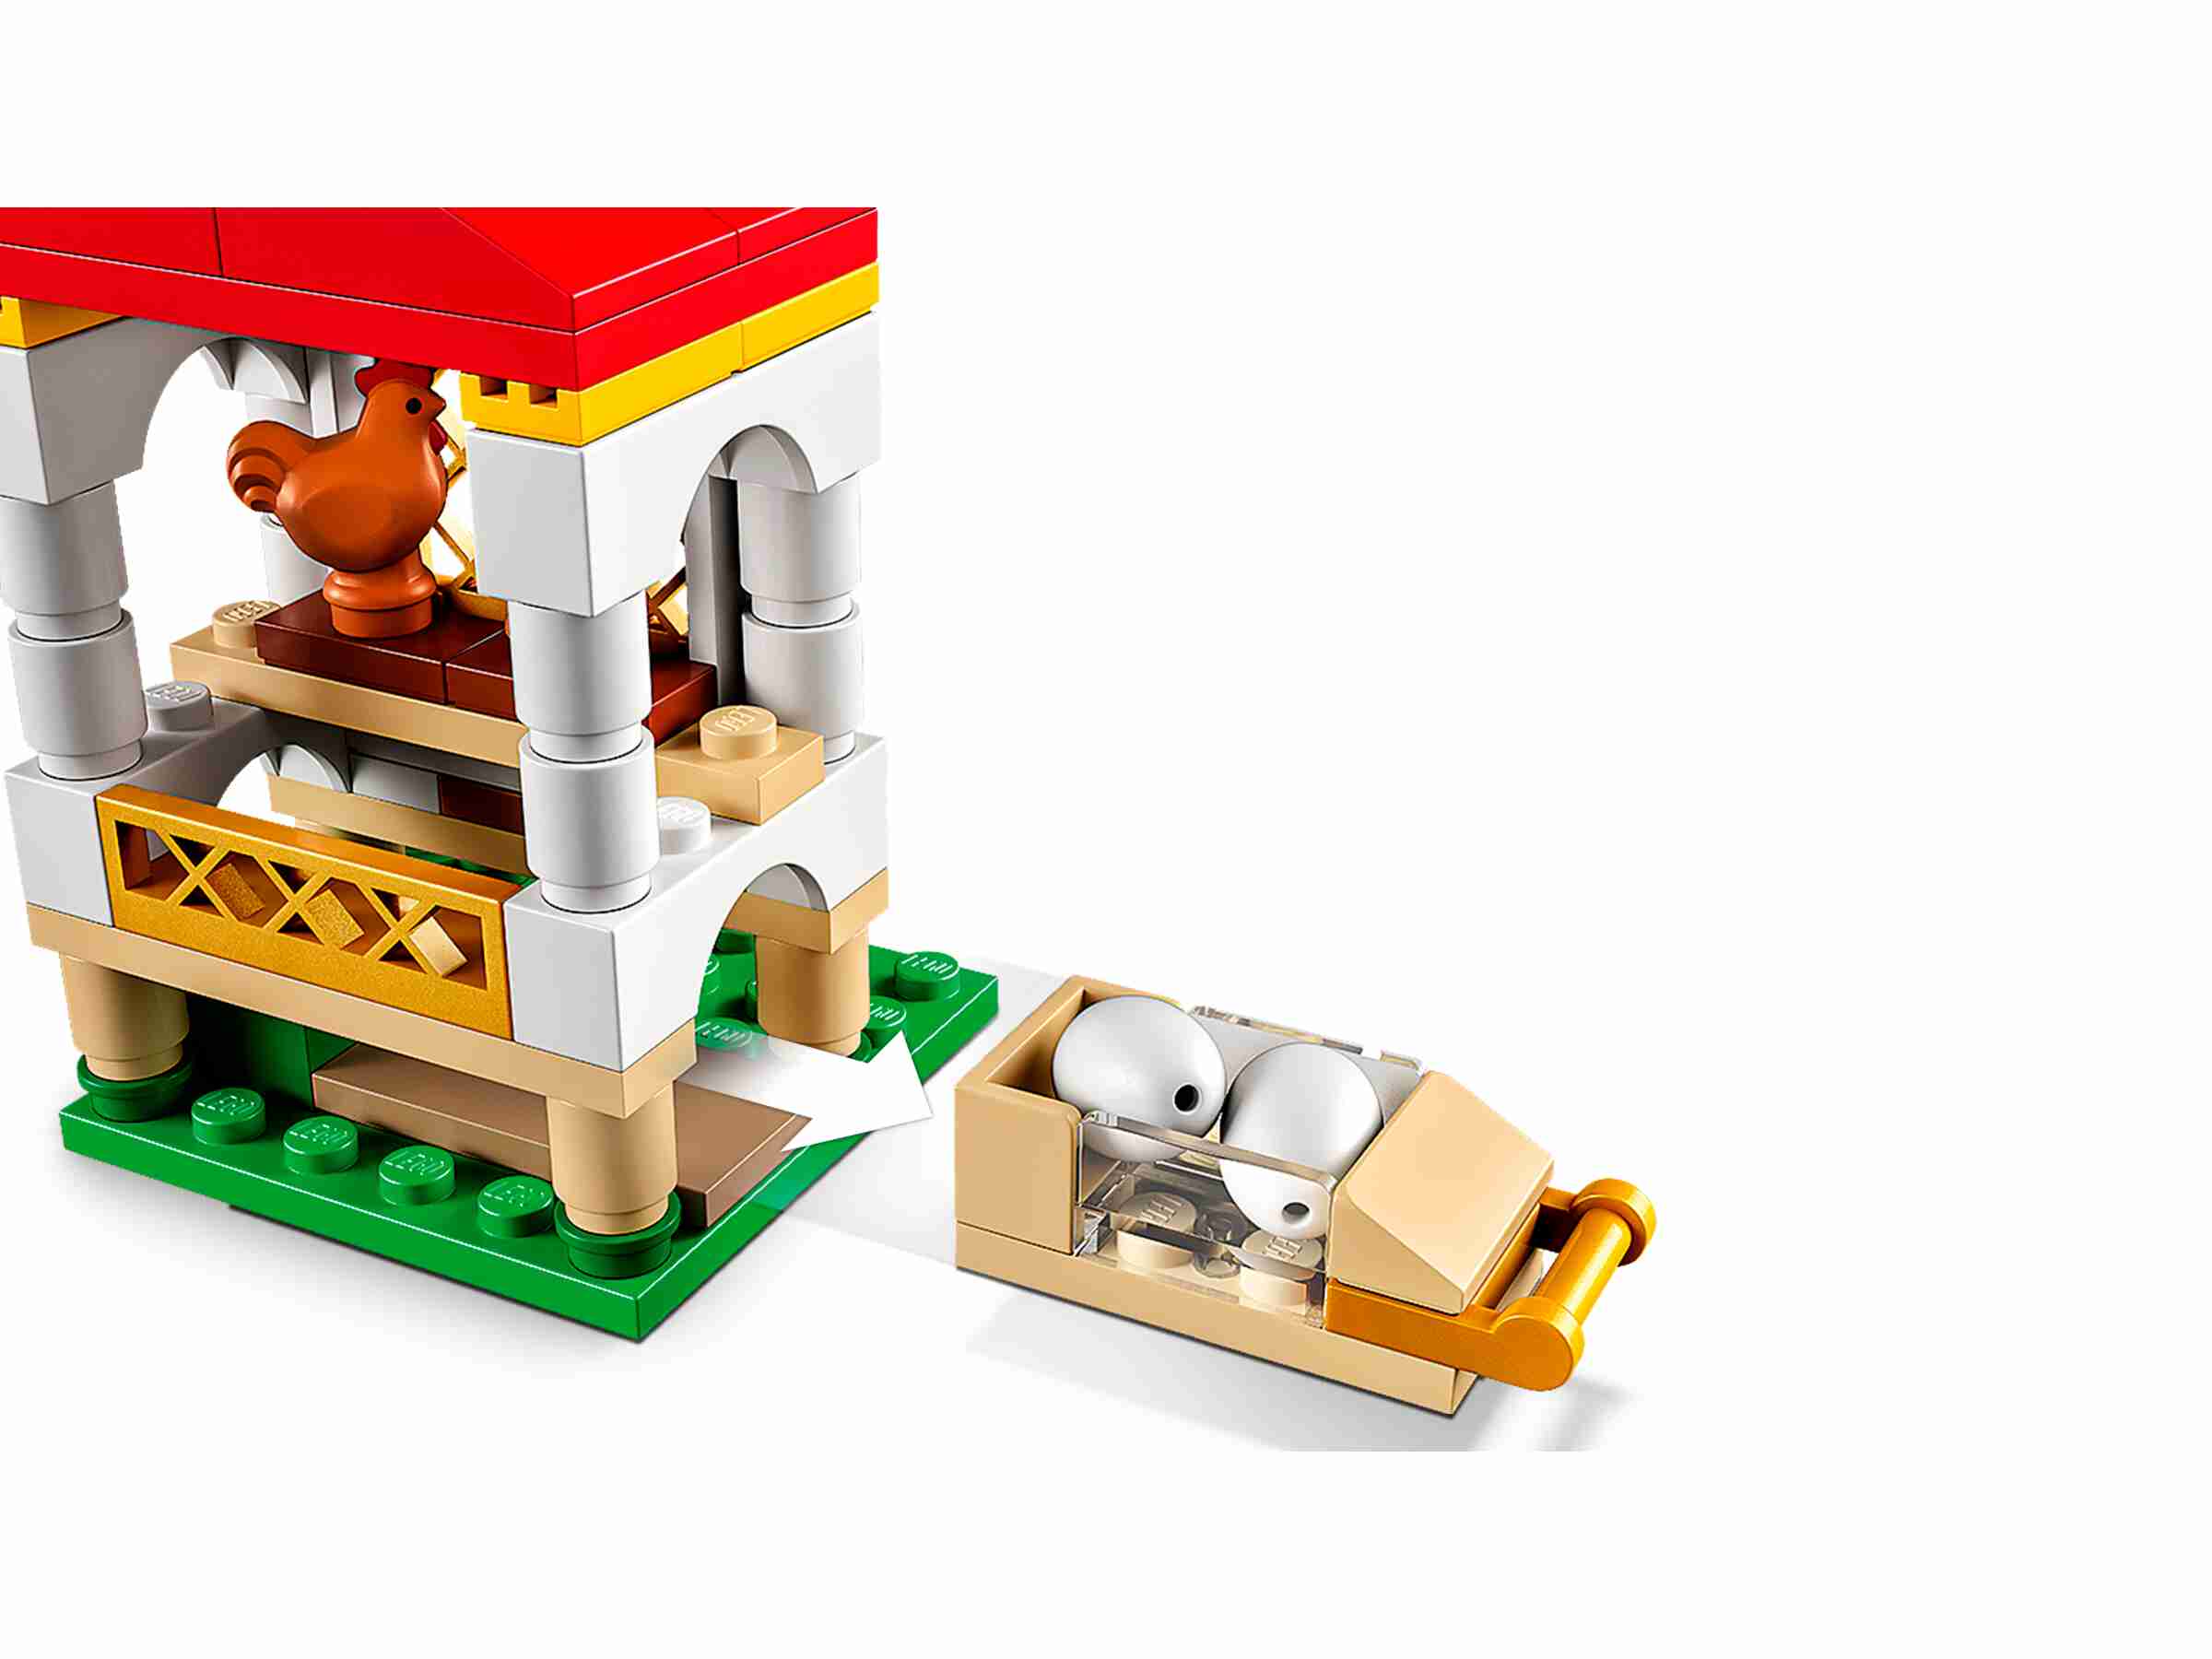 LEGO 60344 City Hühnerstall, Quad mit Kipplenkung, 2 Hühner, 1 Bäuerin